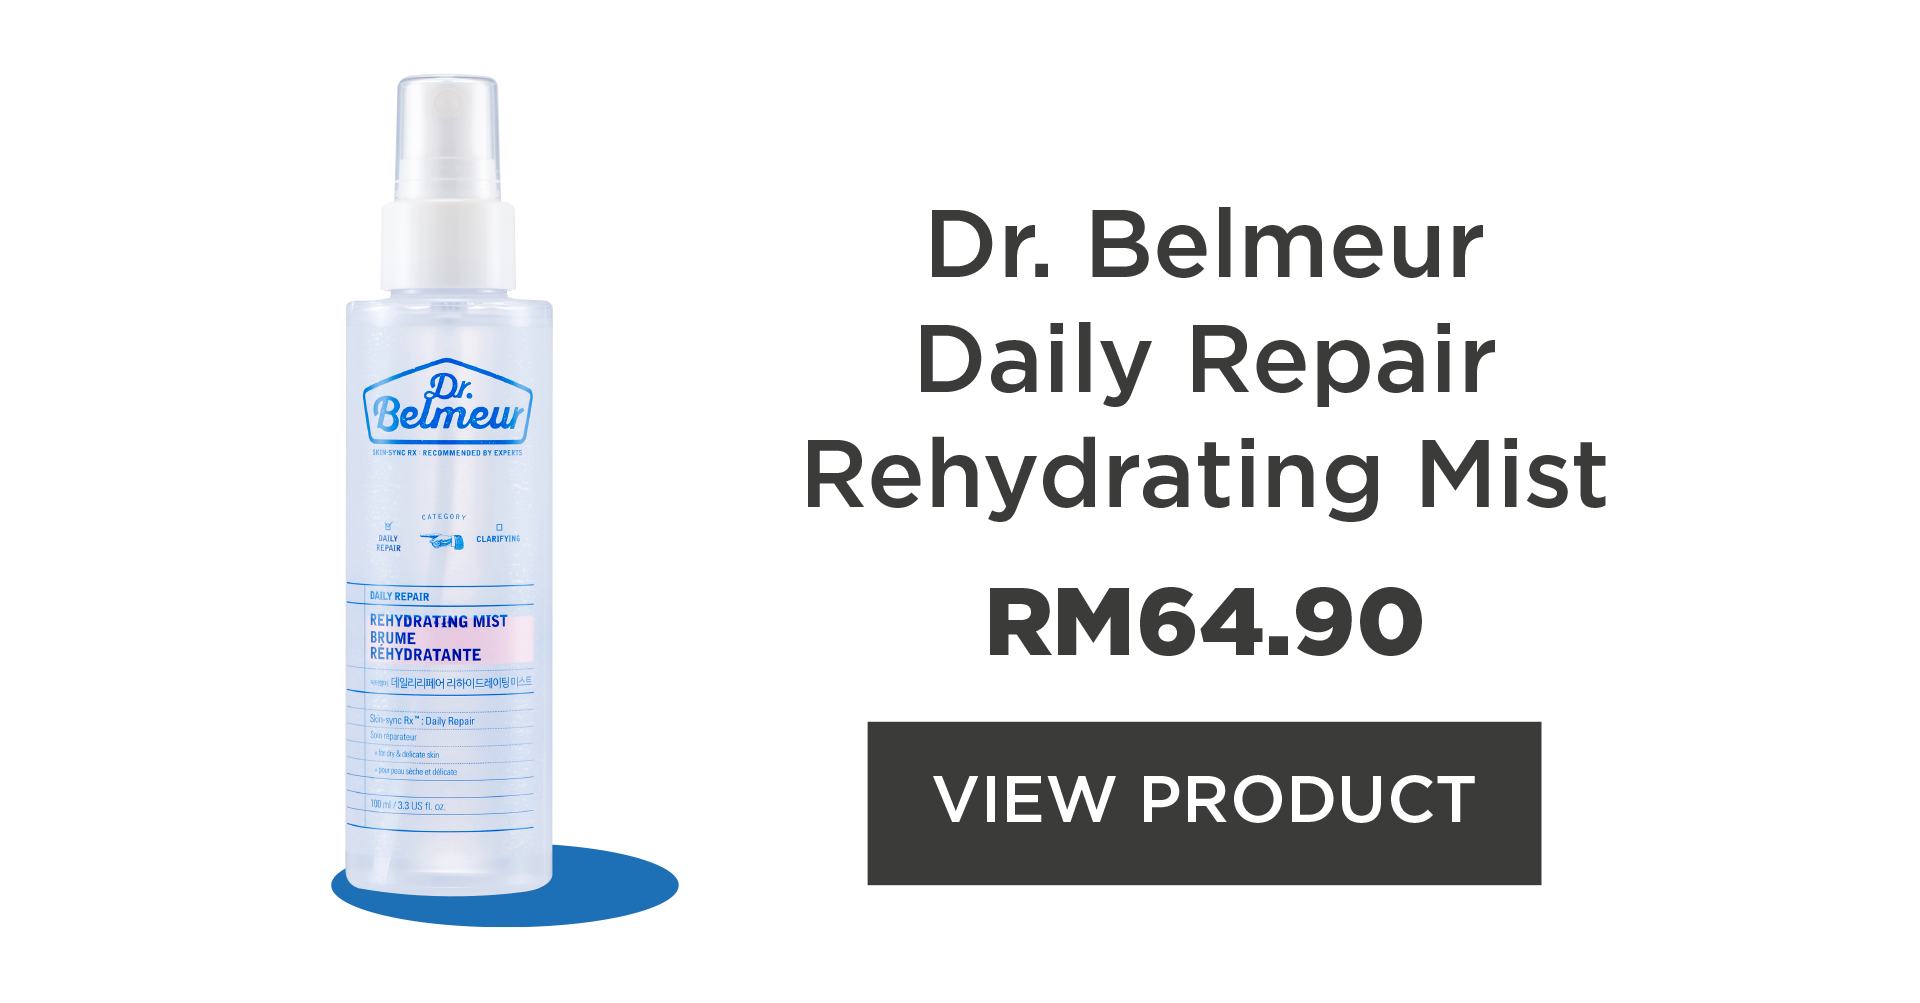 Dr. Belmeur Daily Repair Rehydrating Mist